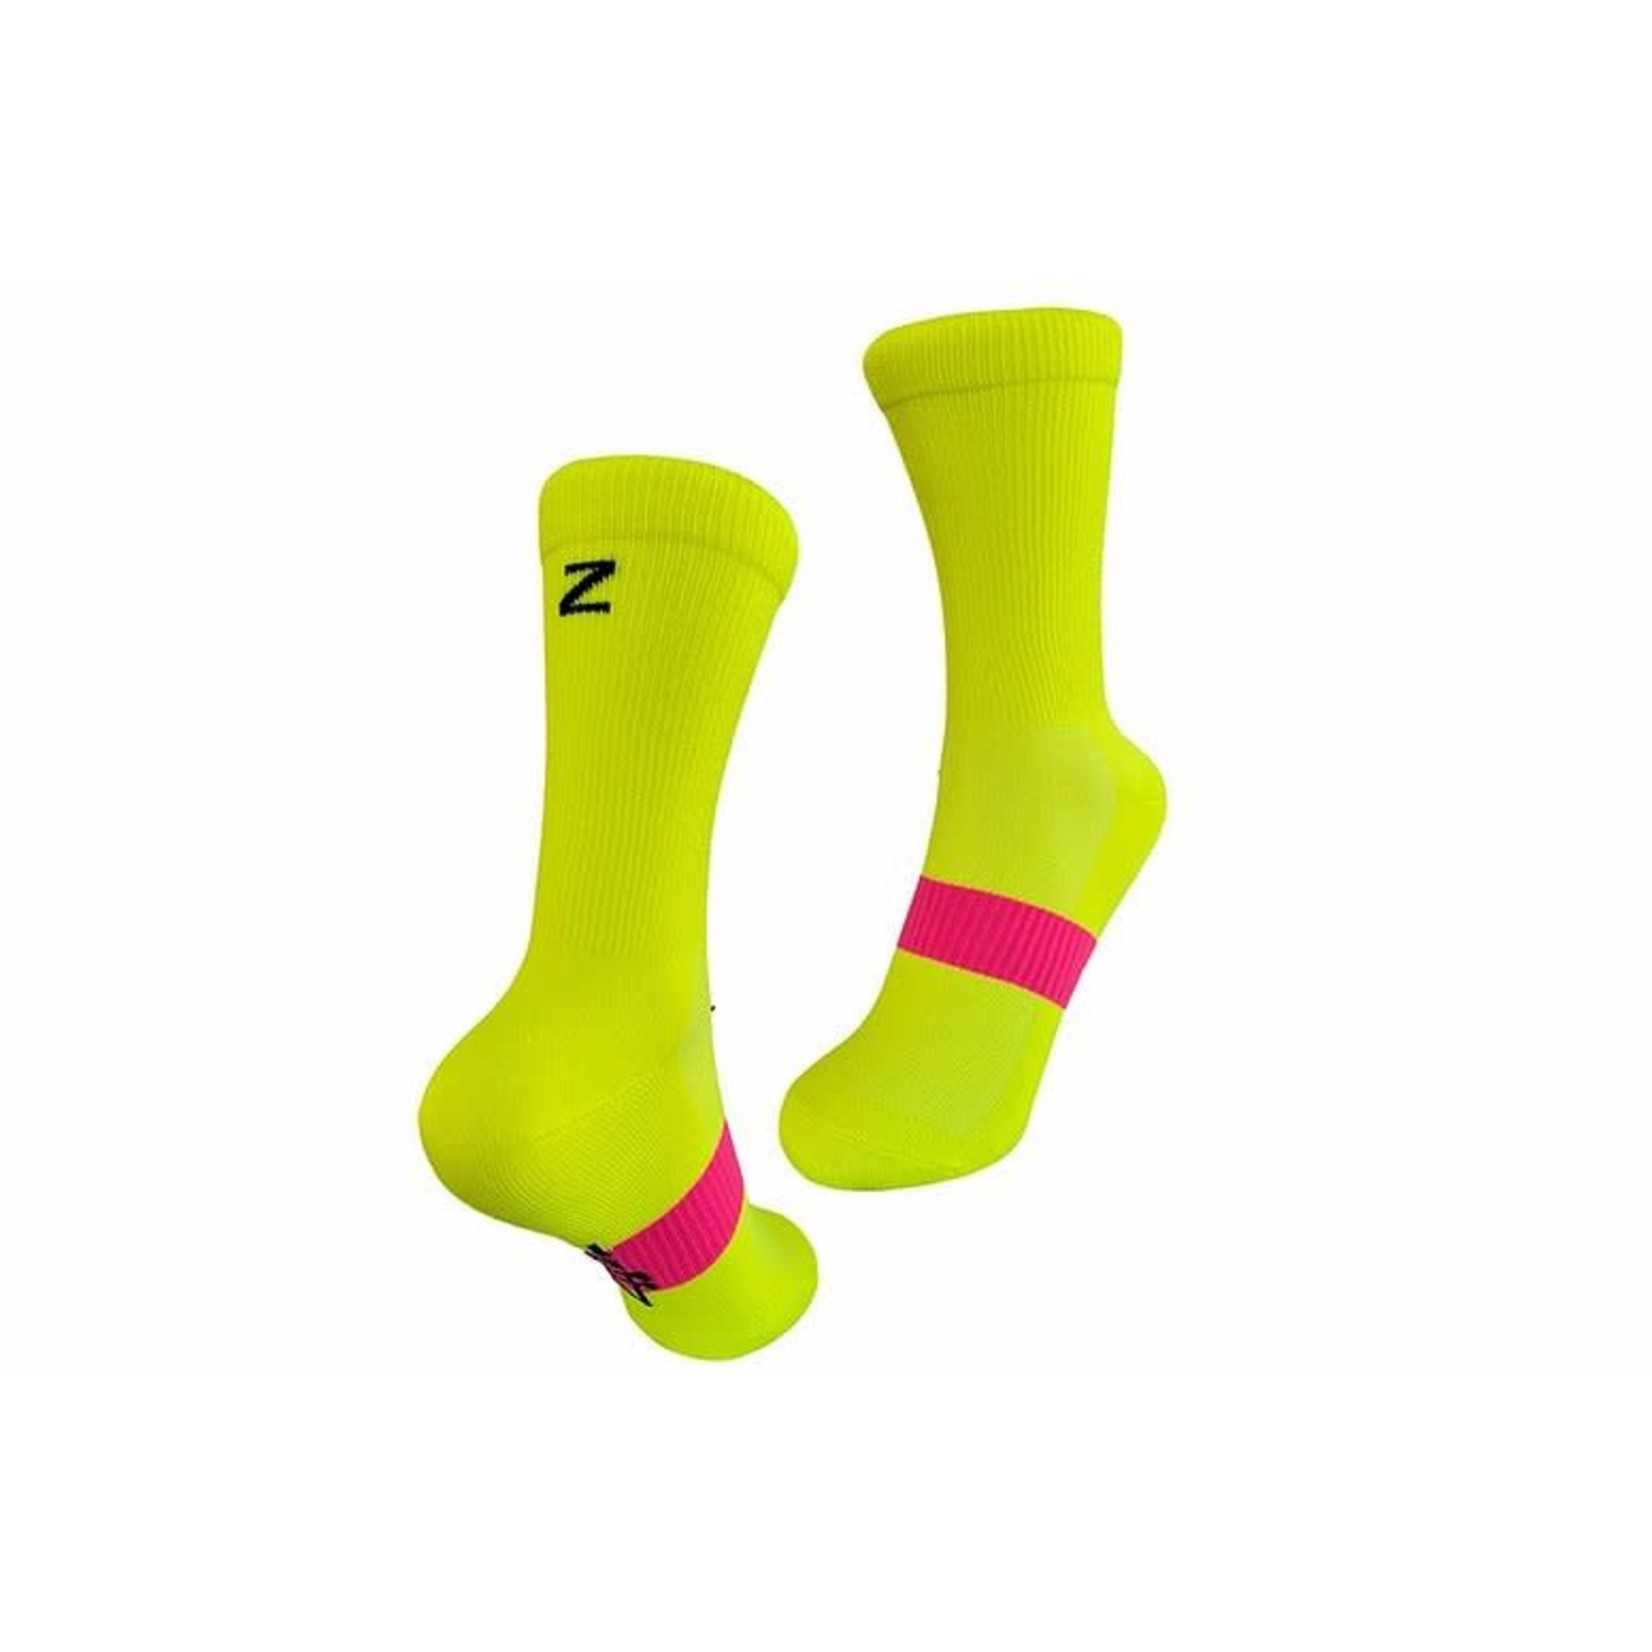 Zeffz cycling socks